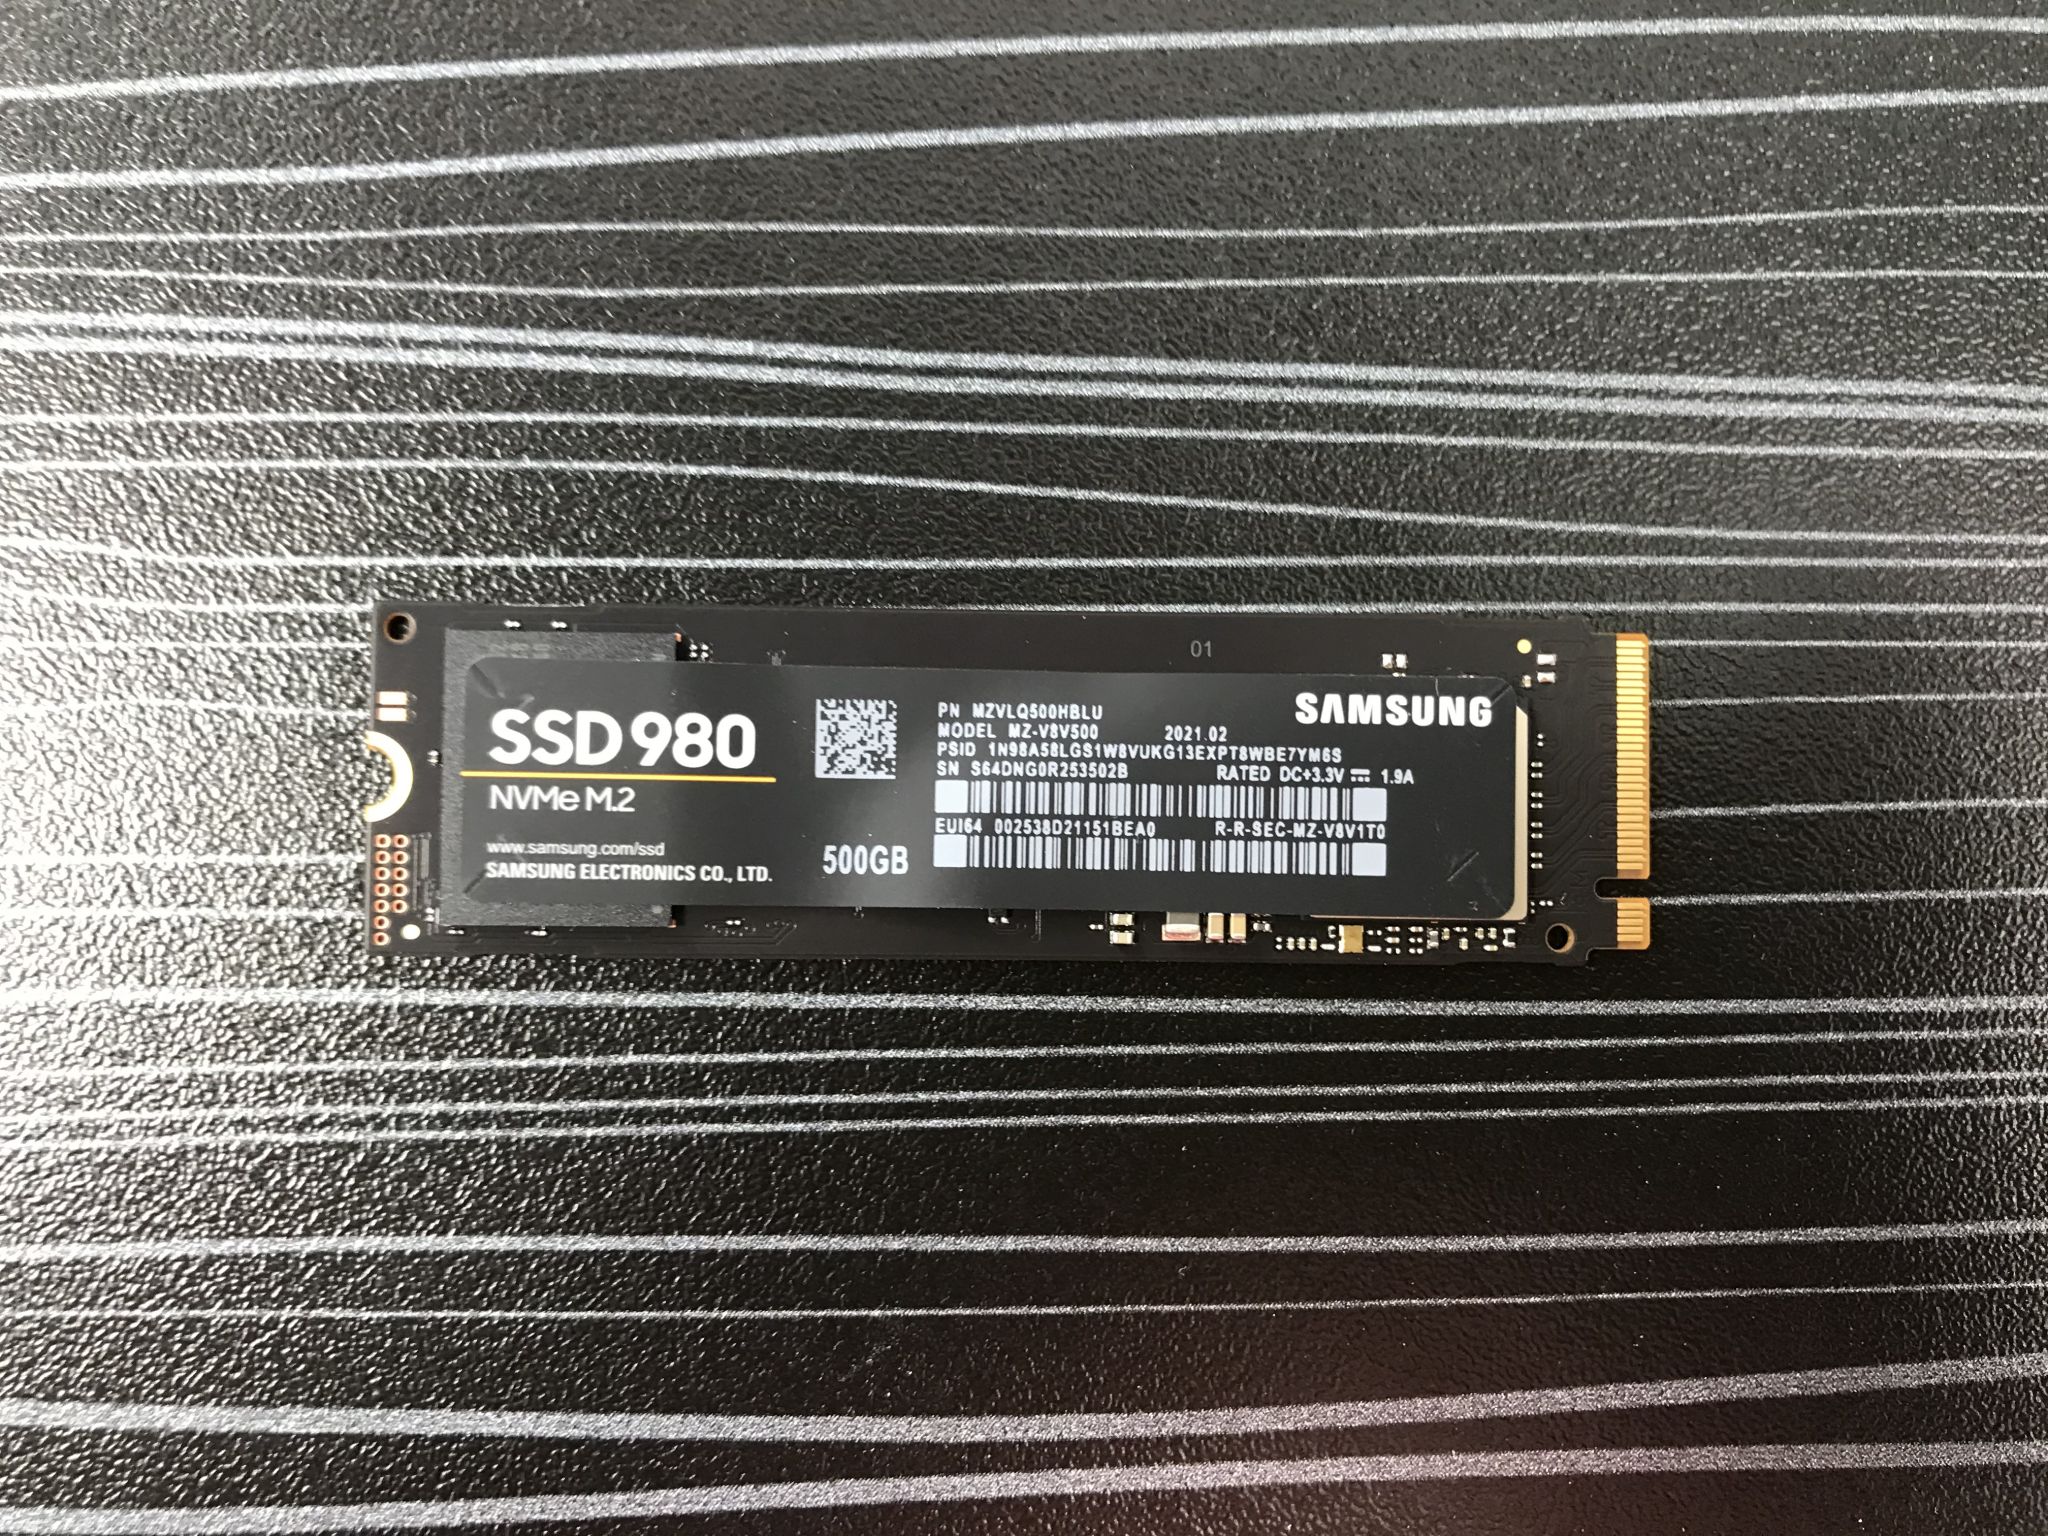 Ssd накопитель samsung 980 m 2 2280. SSD Samsung 980 MZ. Samsung SSD 980 500gb. SSD m2 Samsung 980 500gb. Samsung SSD 500gb 980 m.2 MZ-v8v500bw.